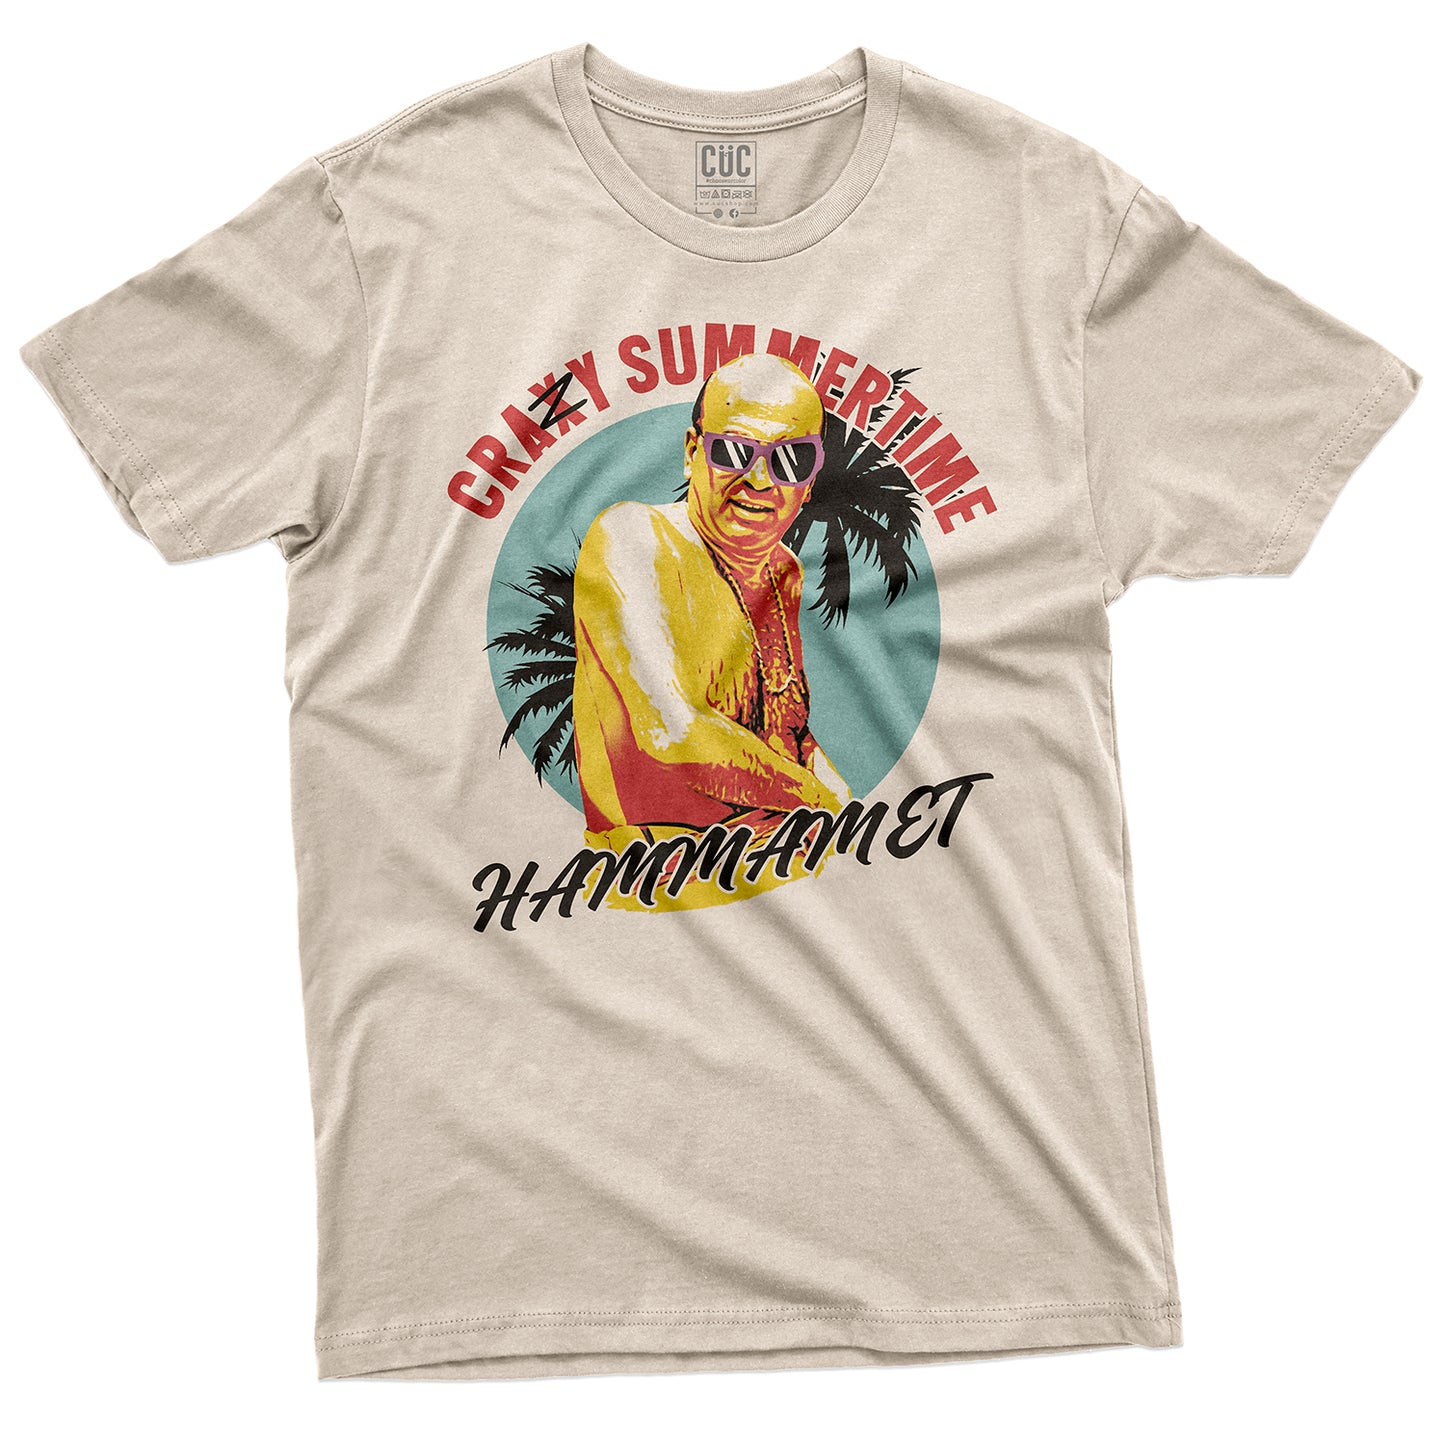 CUC T-Shirt CRAXI SUMMERTIME  - Bettino Summer Edition  #chooseurcolor